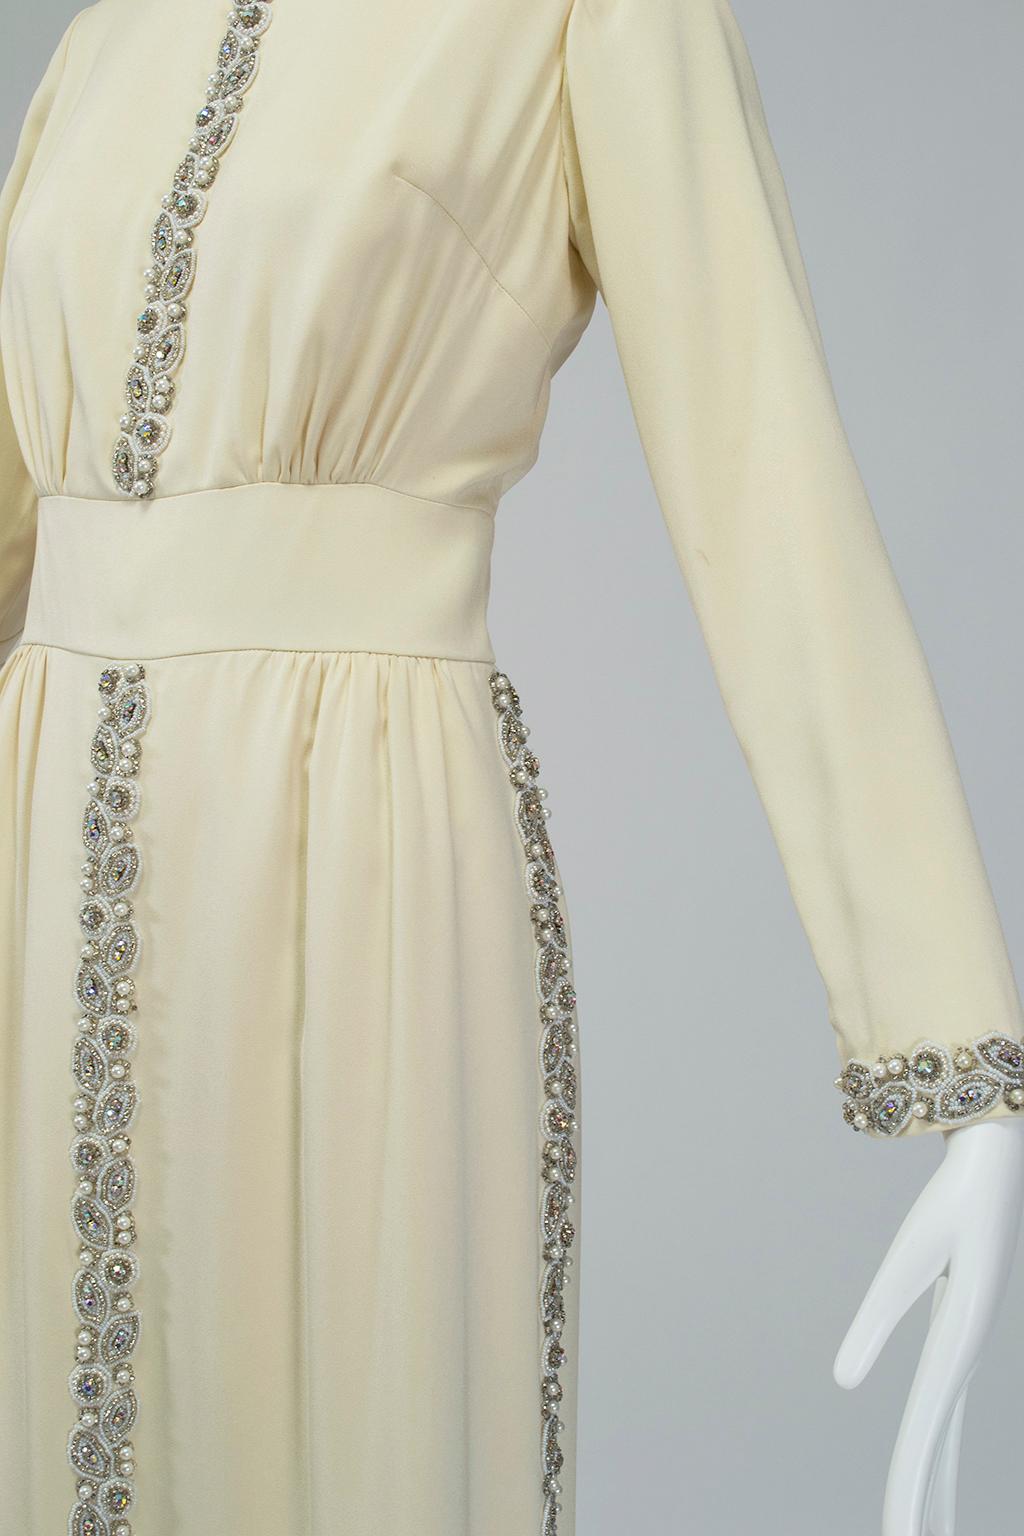 Women's Byzantine Cream Jeweled Silk Modesty-Dressing Panel Skirt Wedding Gown – M, 1968 For Sale